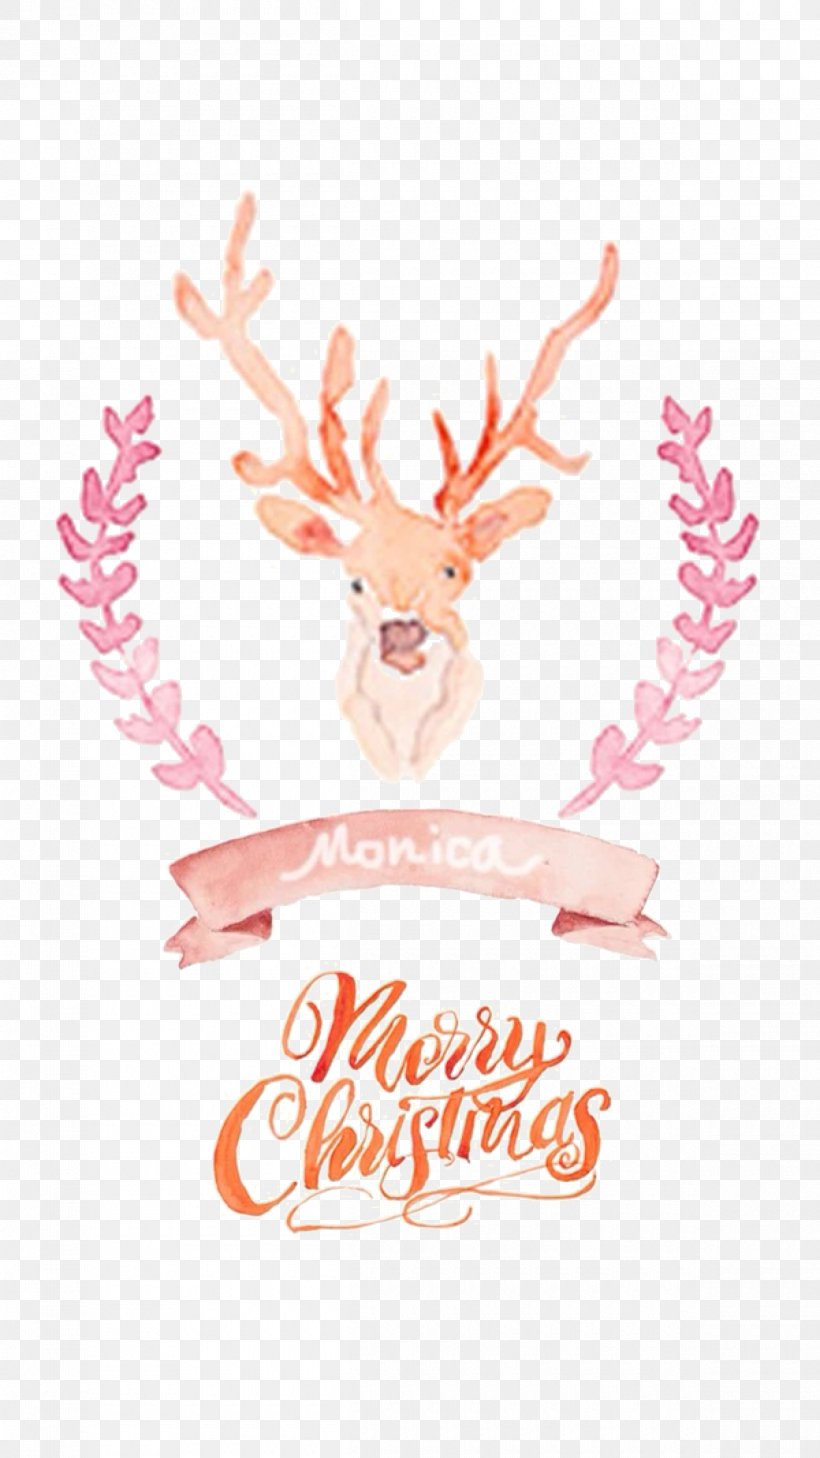 Christmas reindeer  wallpapersc iPhone7Plus